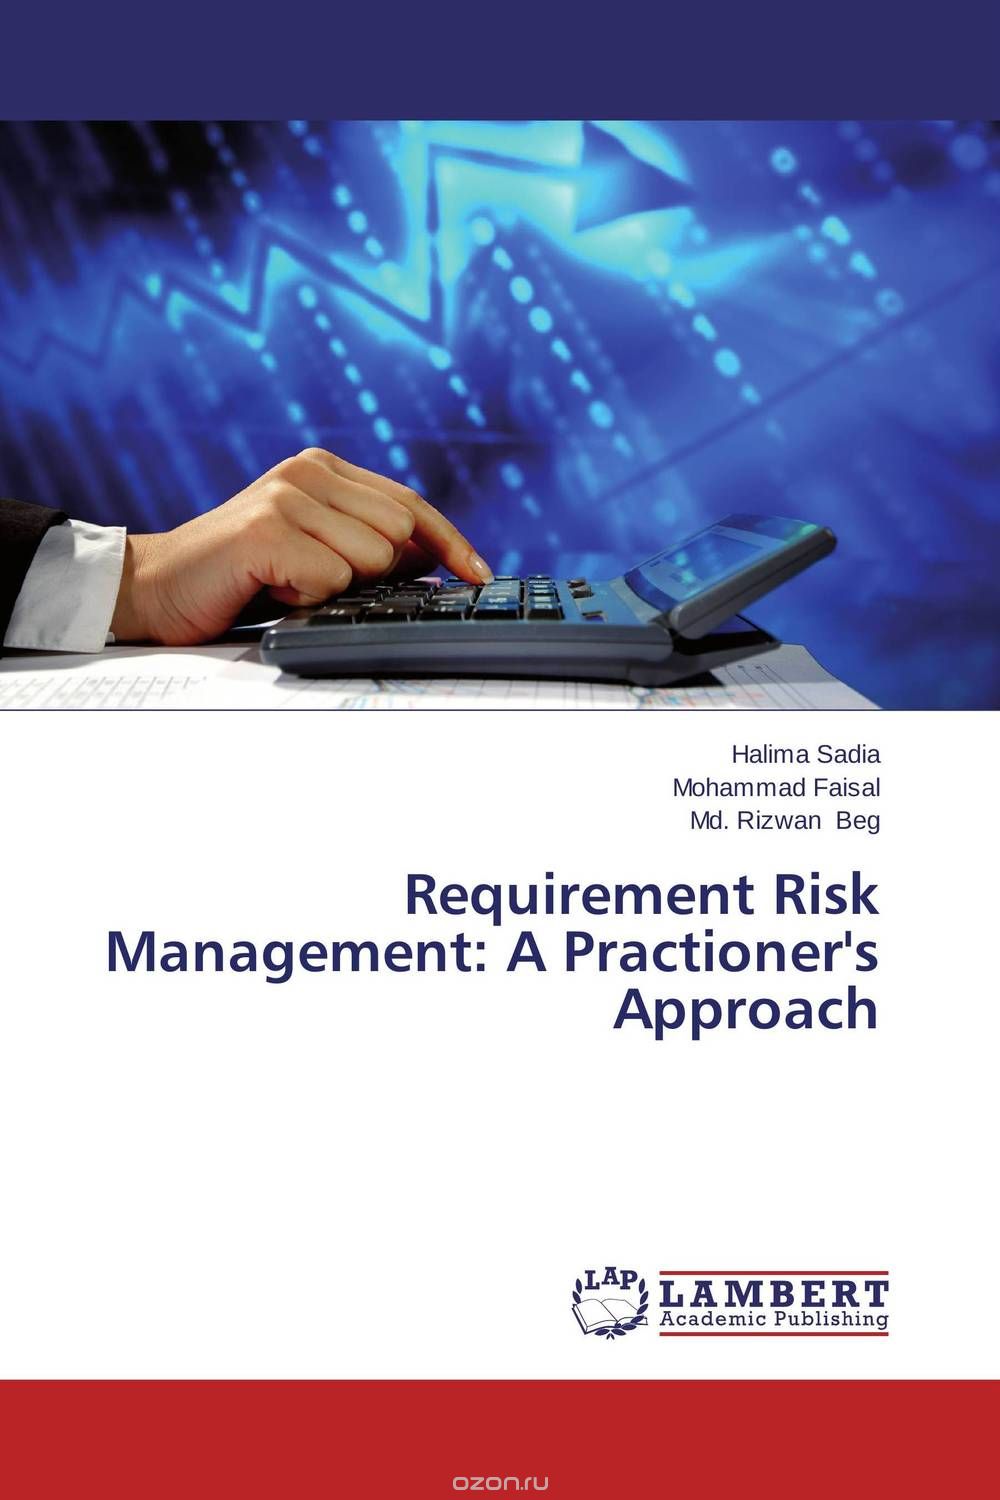 Скачать книгу "Requirement Risk Management: A Practioner's Approach"